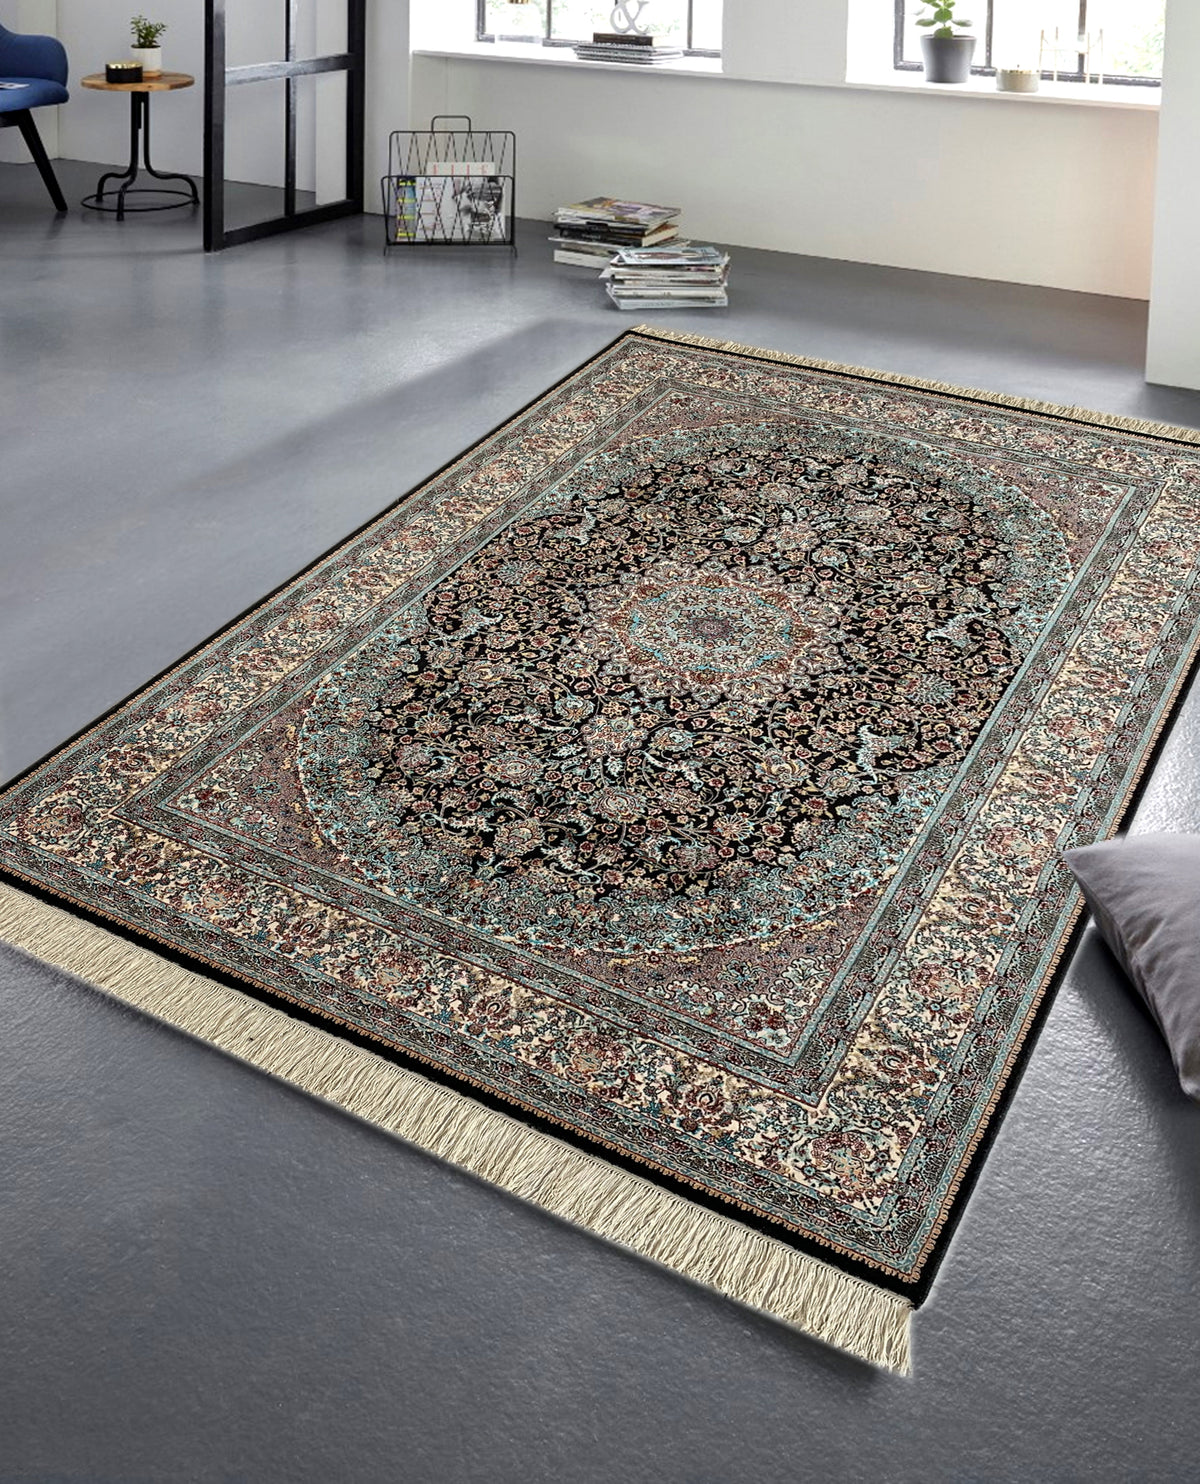 Rugslane Irani Black Ground Cream Border High Quality Super Premium Silk Carpet 5.0ft X 7.5ft